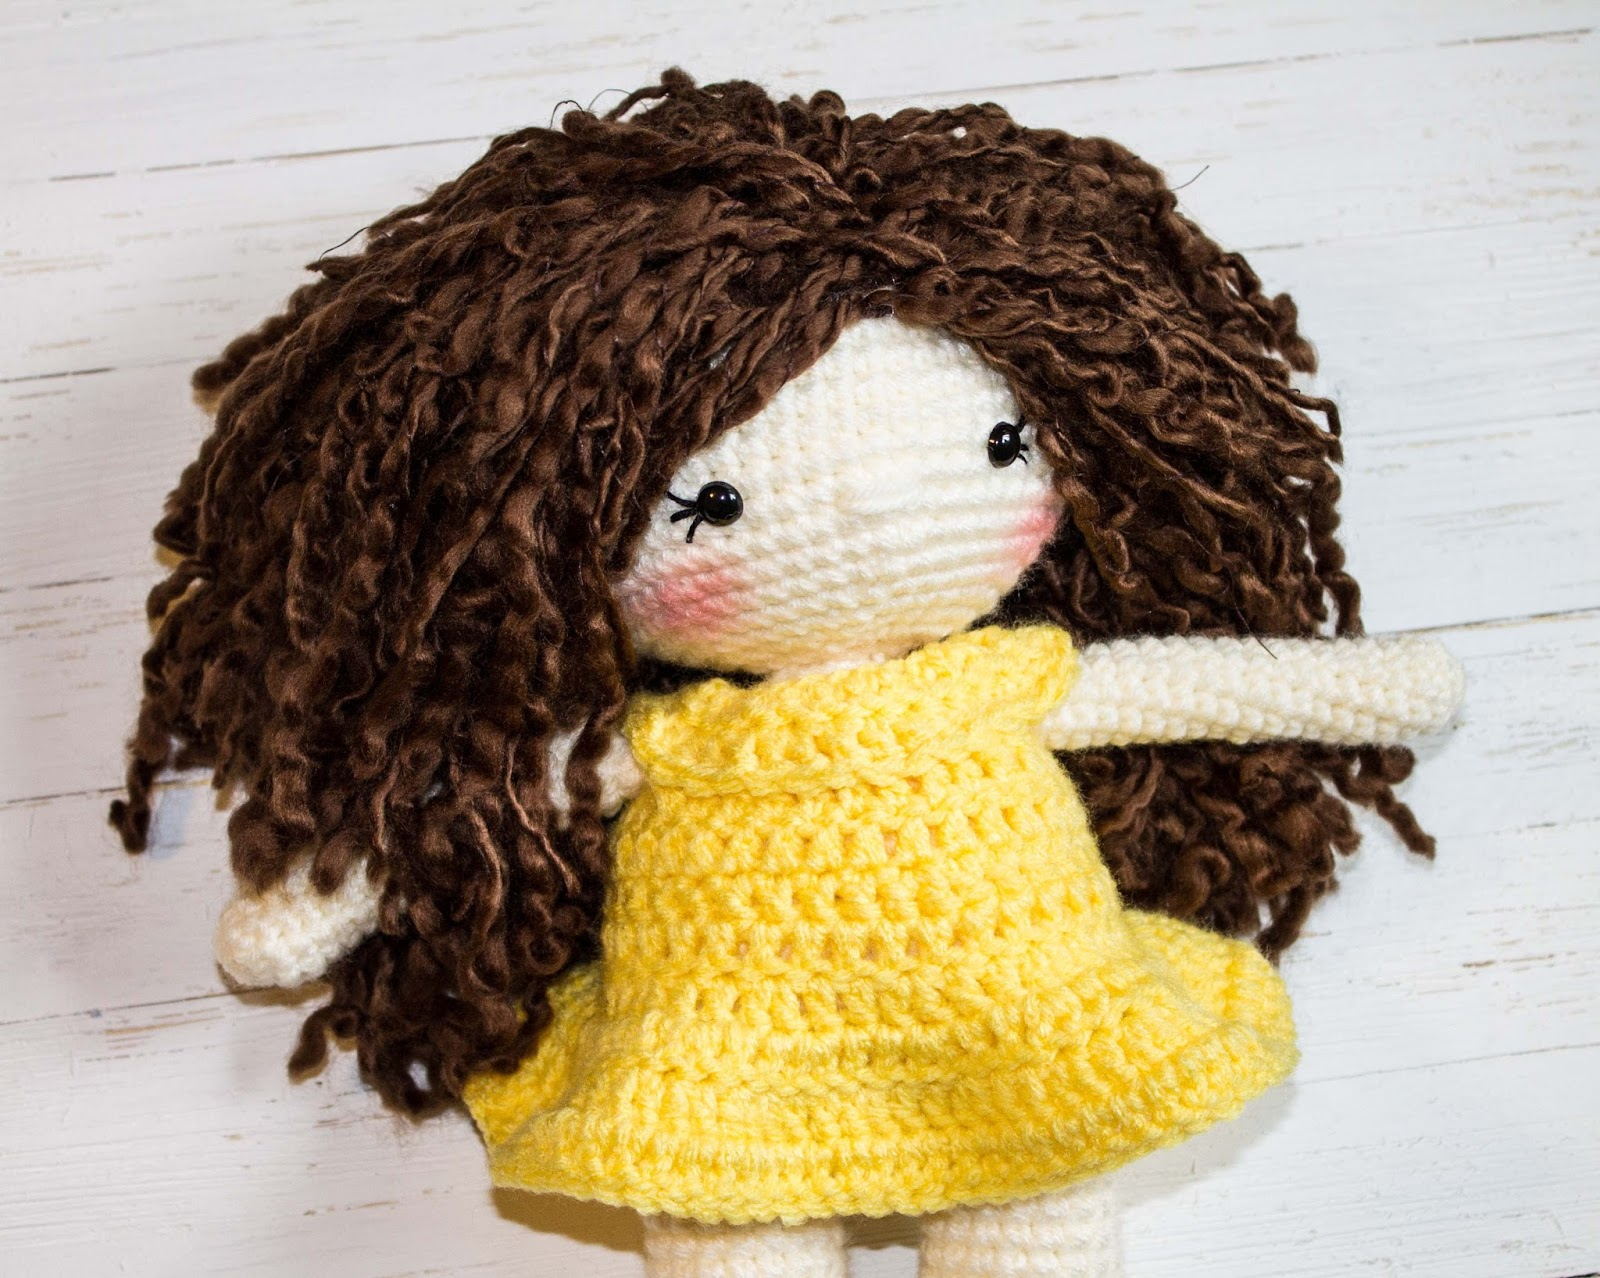 Crochet Hair Patterns How To Attach Hair To A Crochet Doll Thefriendlyredfox